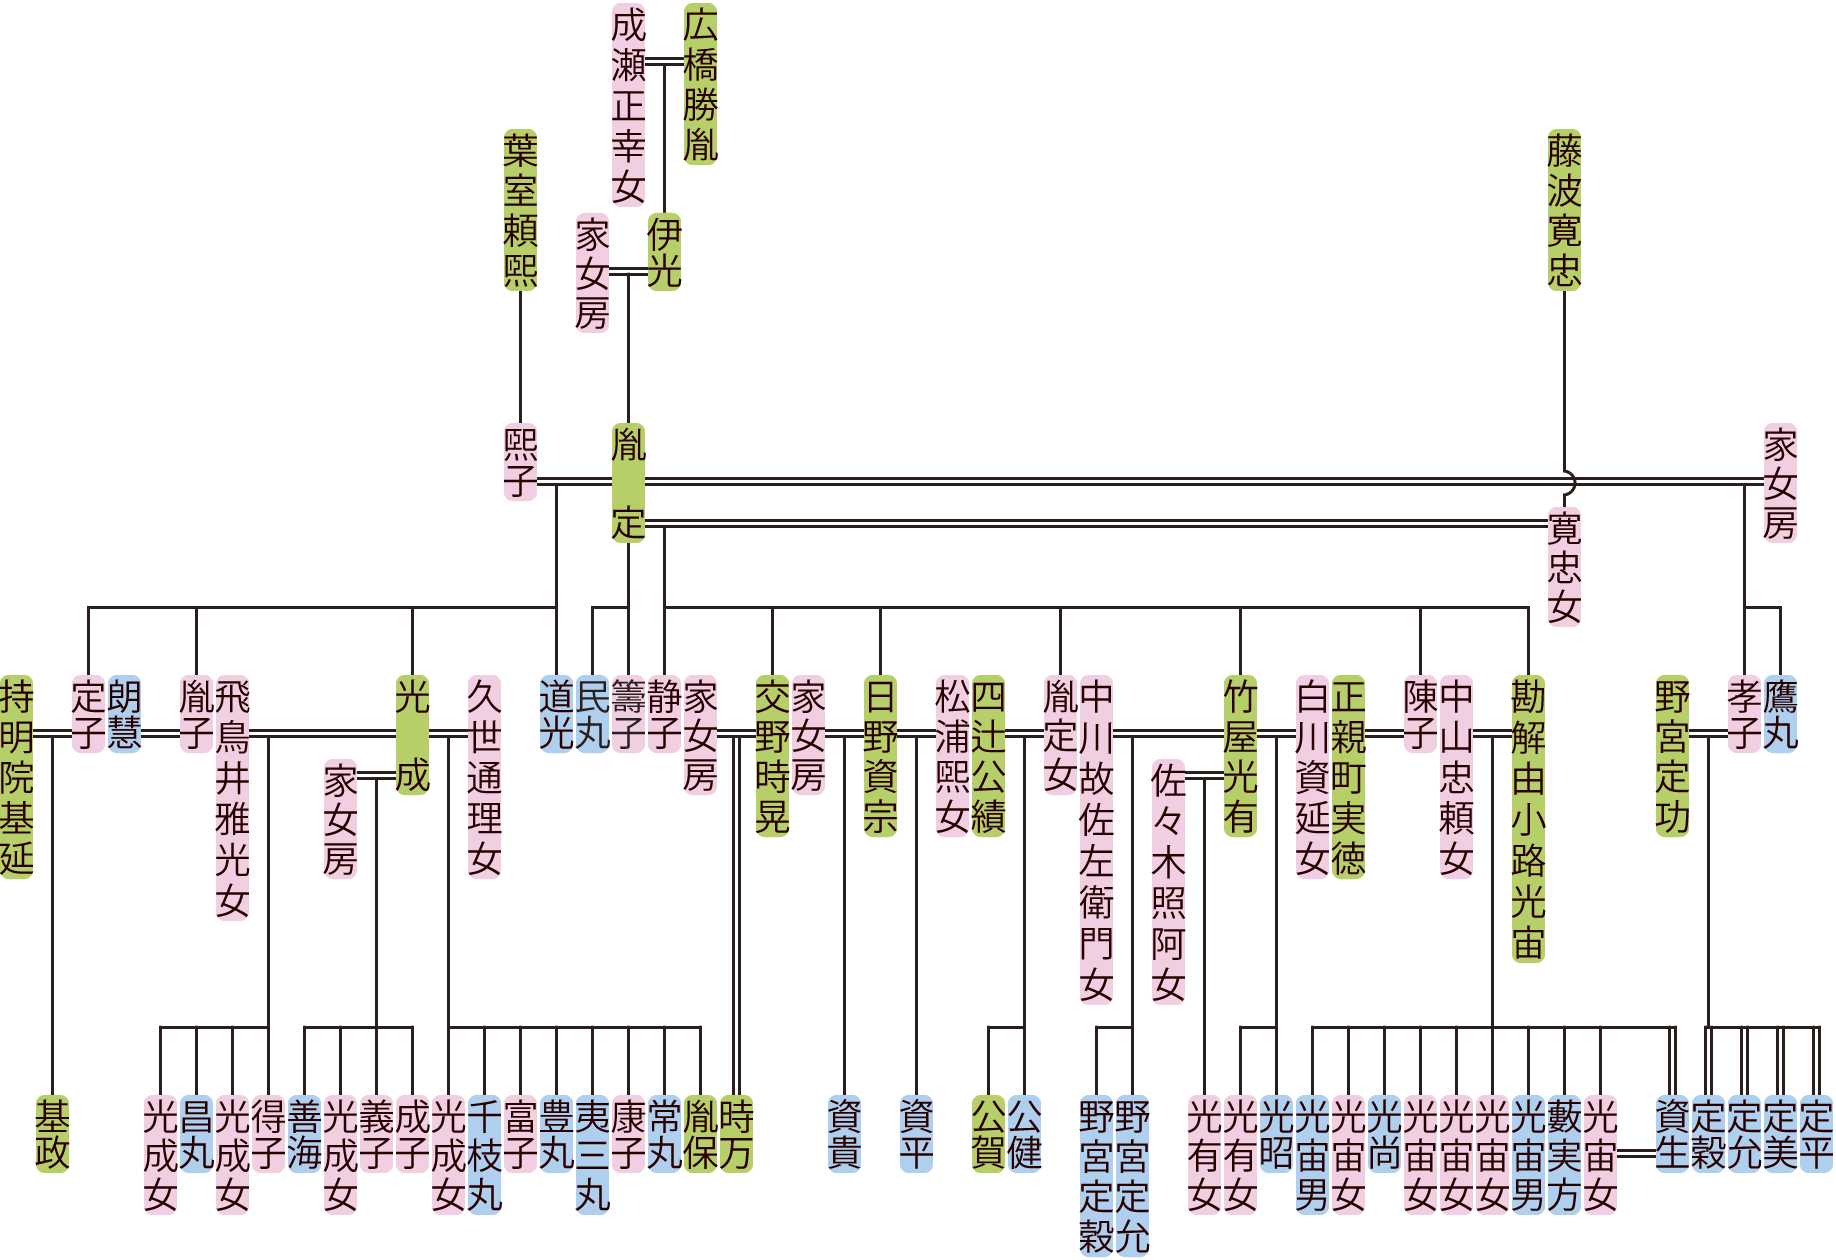 広橋胤定の系図